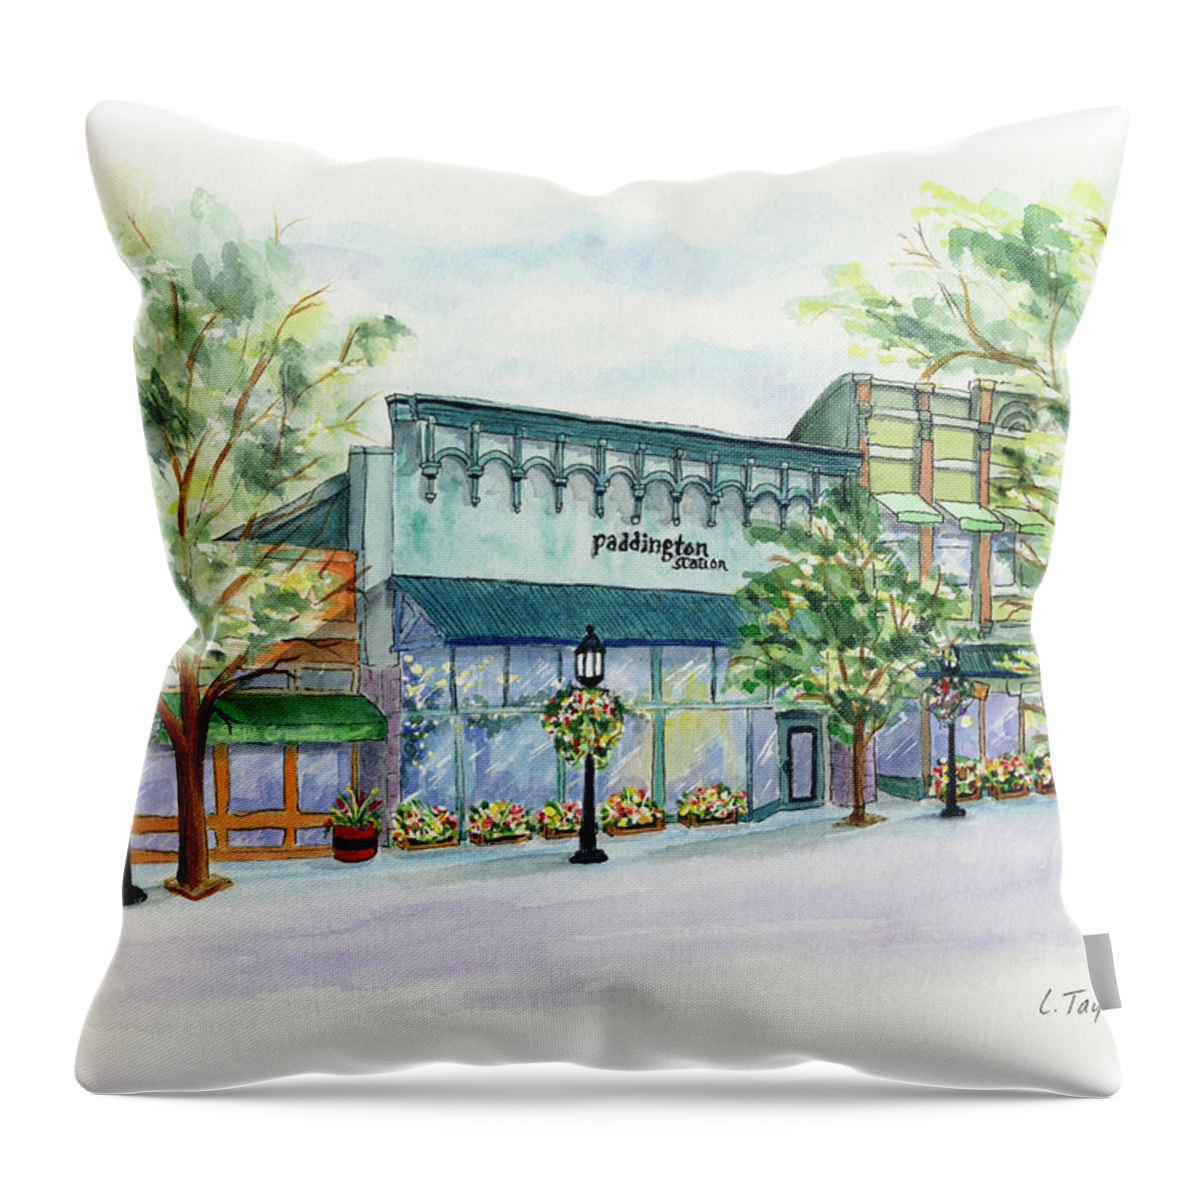 Paddington Station Throw Pillow featuring the painting Paddington on Main by Lori Taylor